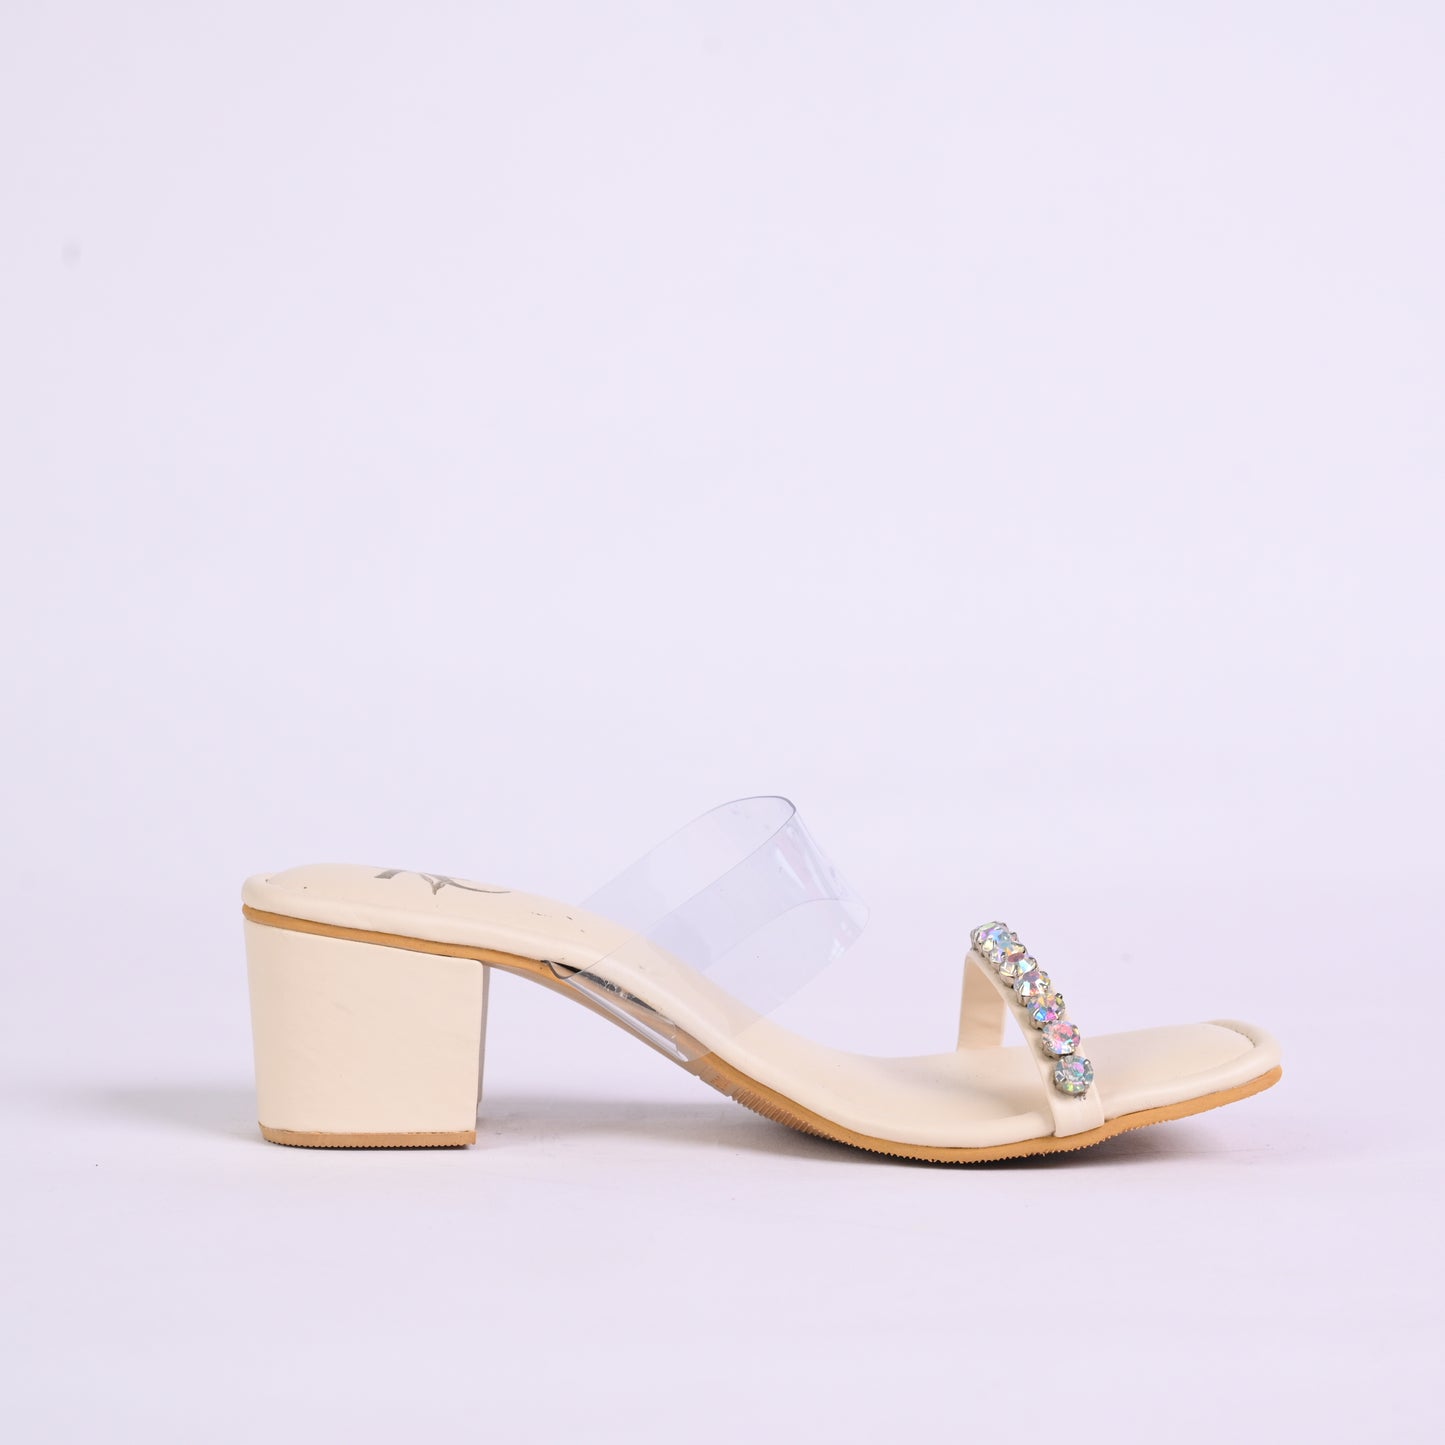 Subtly Shining Women’s Heels – Cream Color